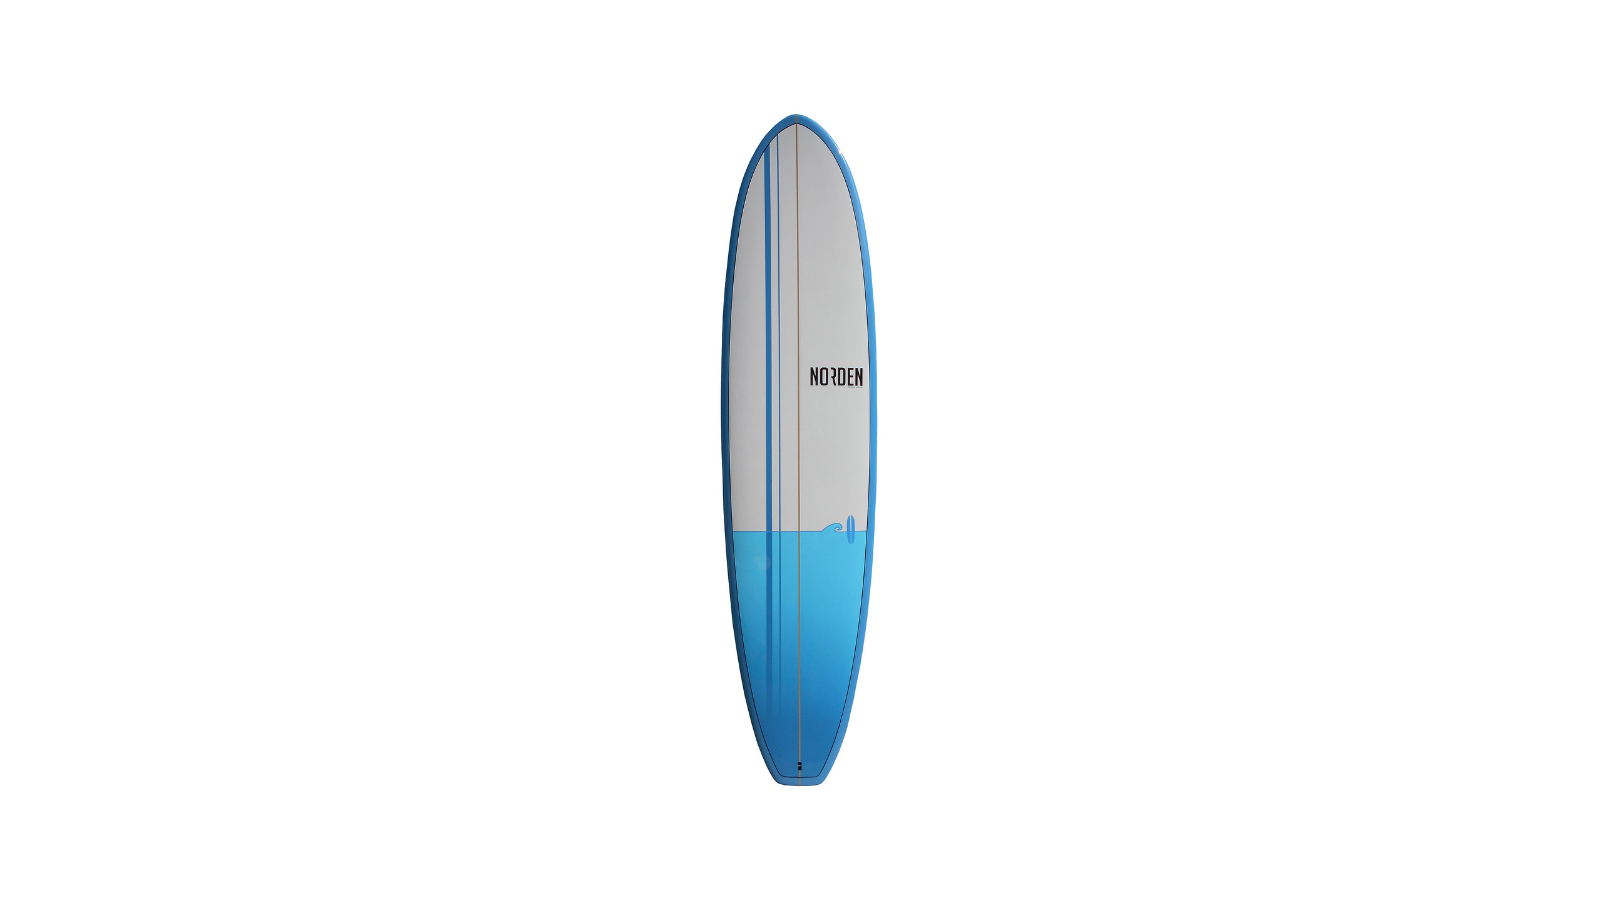 norden-surfboards-malibu-First-Ride-blue-top-epoxy-composite